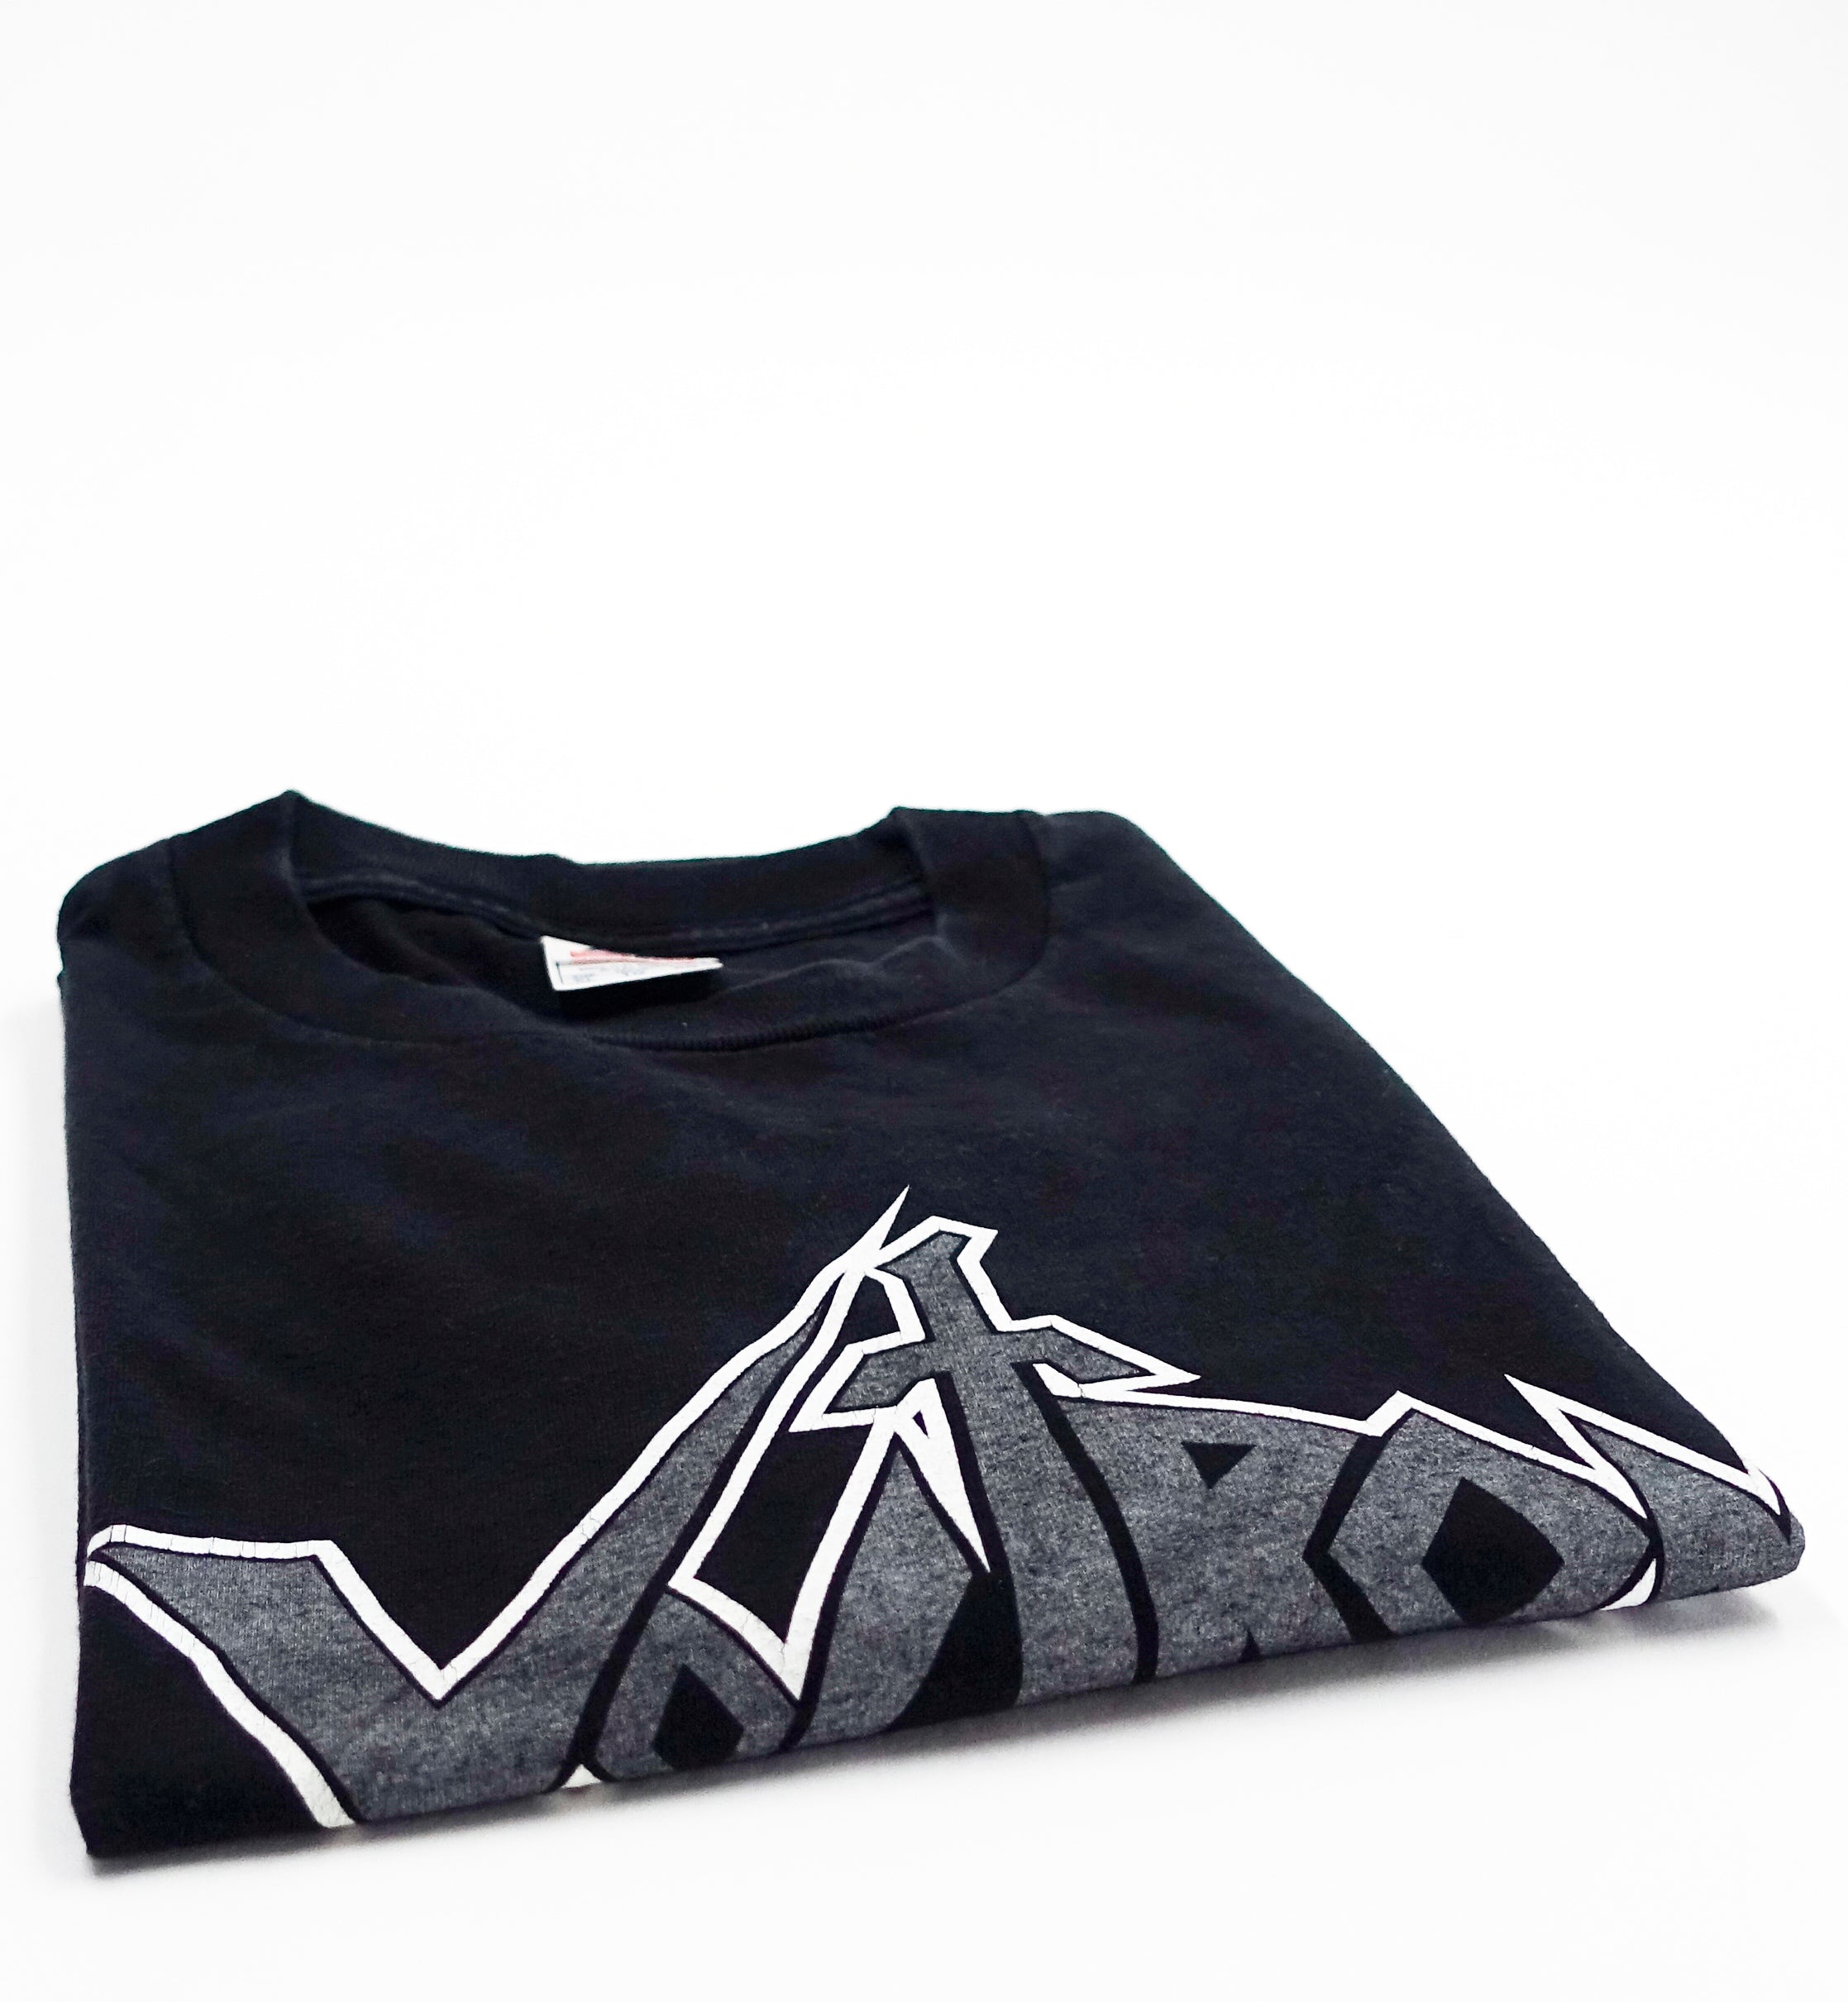 Voltron - Defender Of The Universe Vintage 90's Shirt Size XL